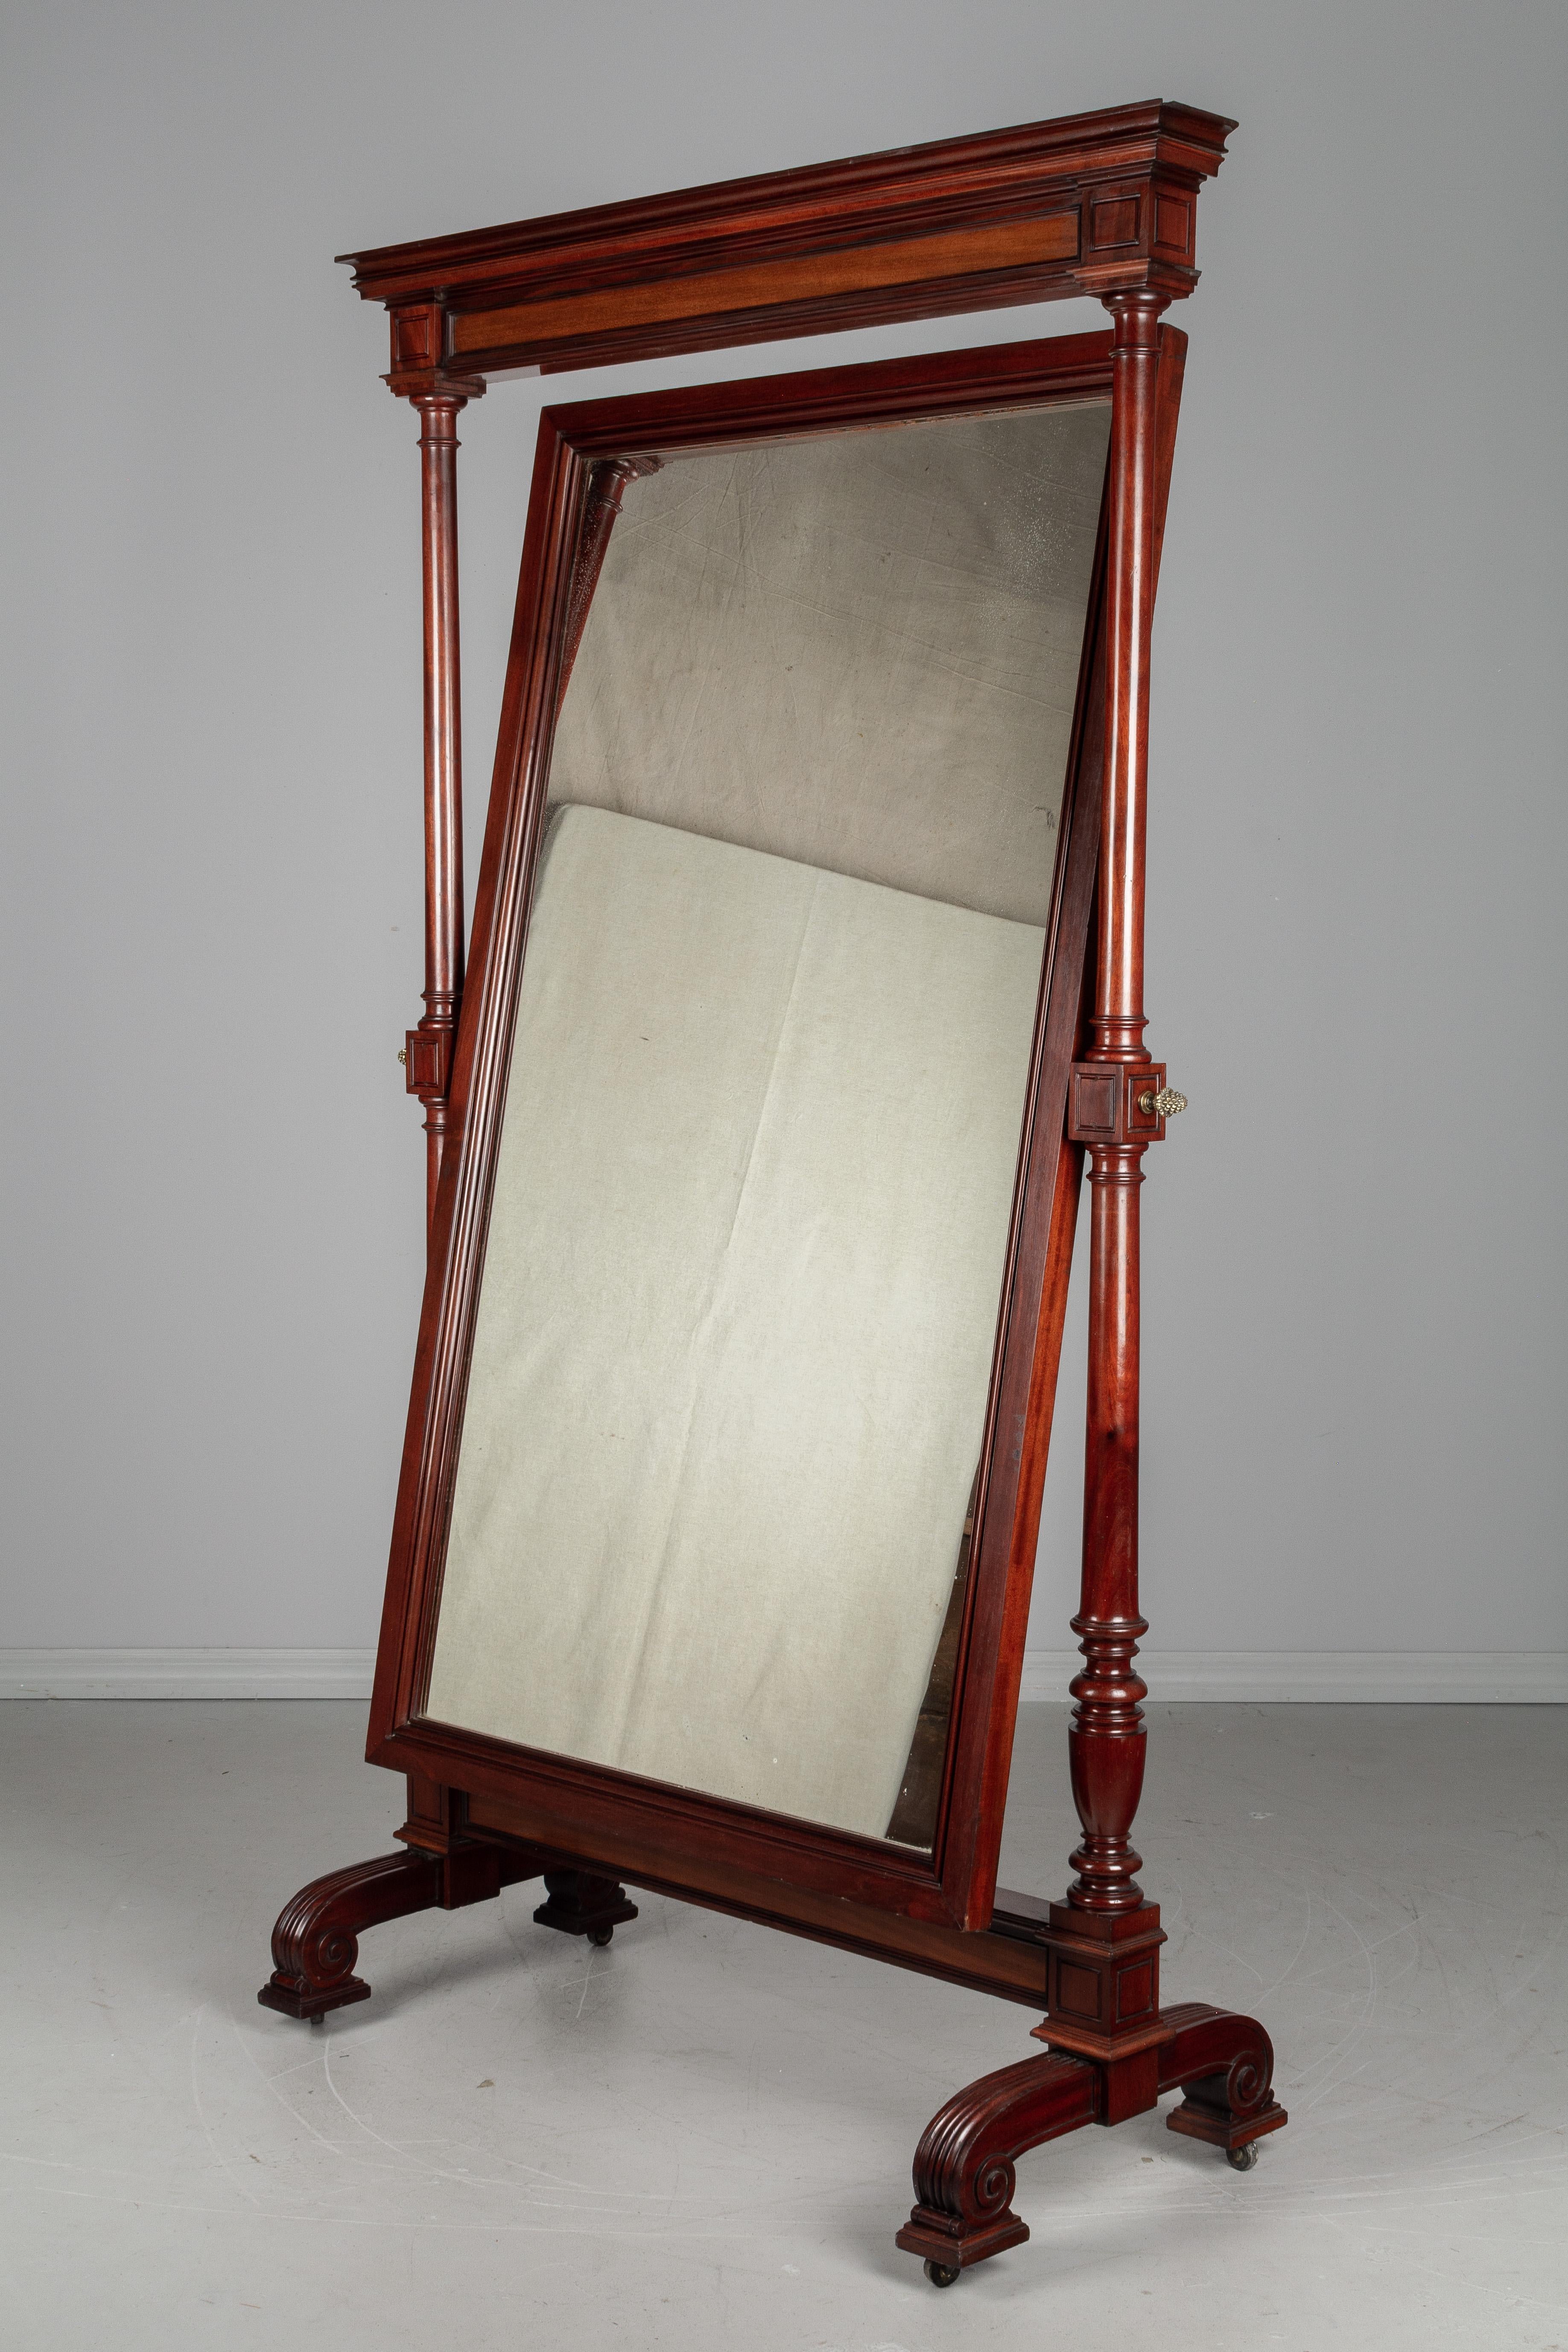 Cast 19th Century French Empire Style Mahogany Cheval Mirror